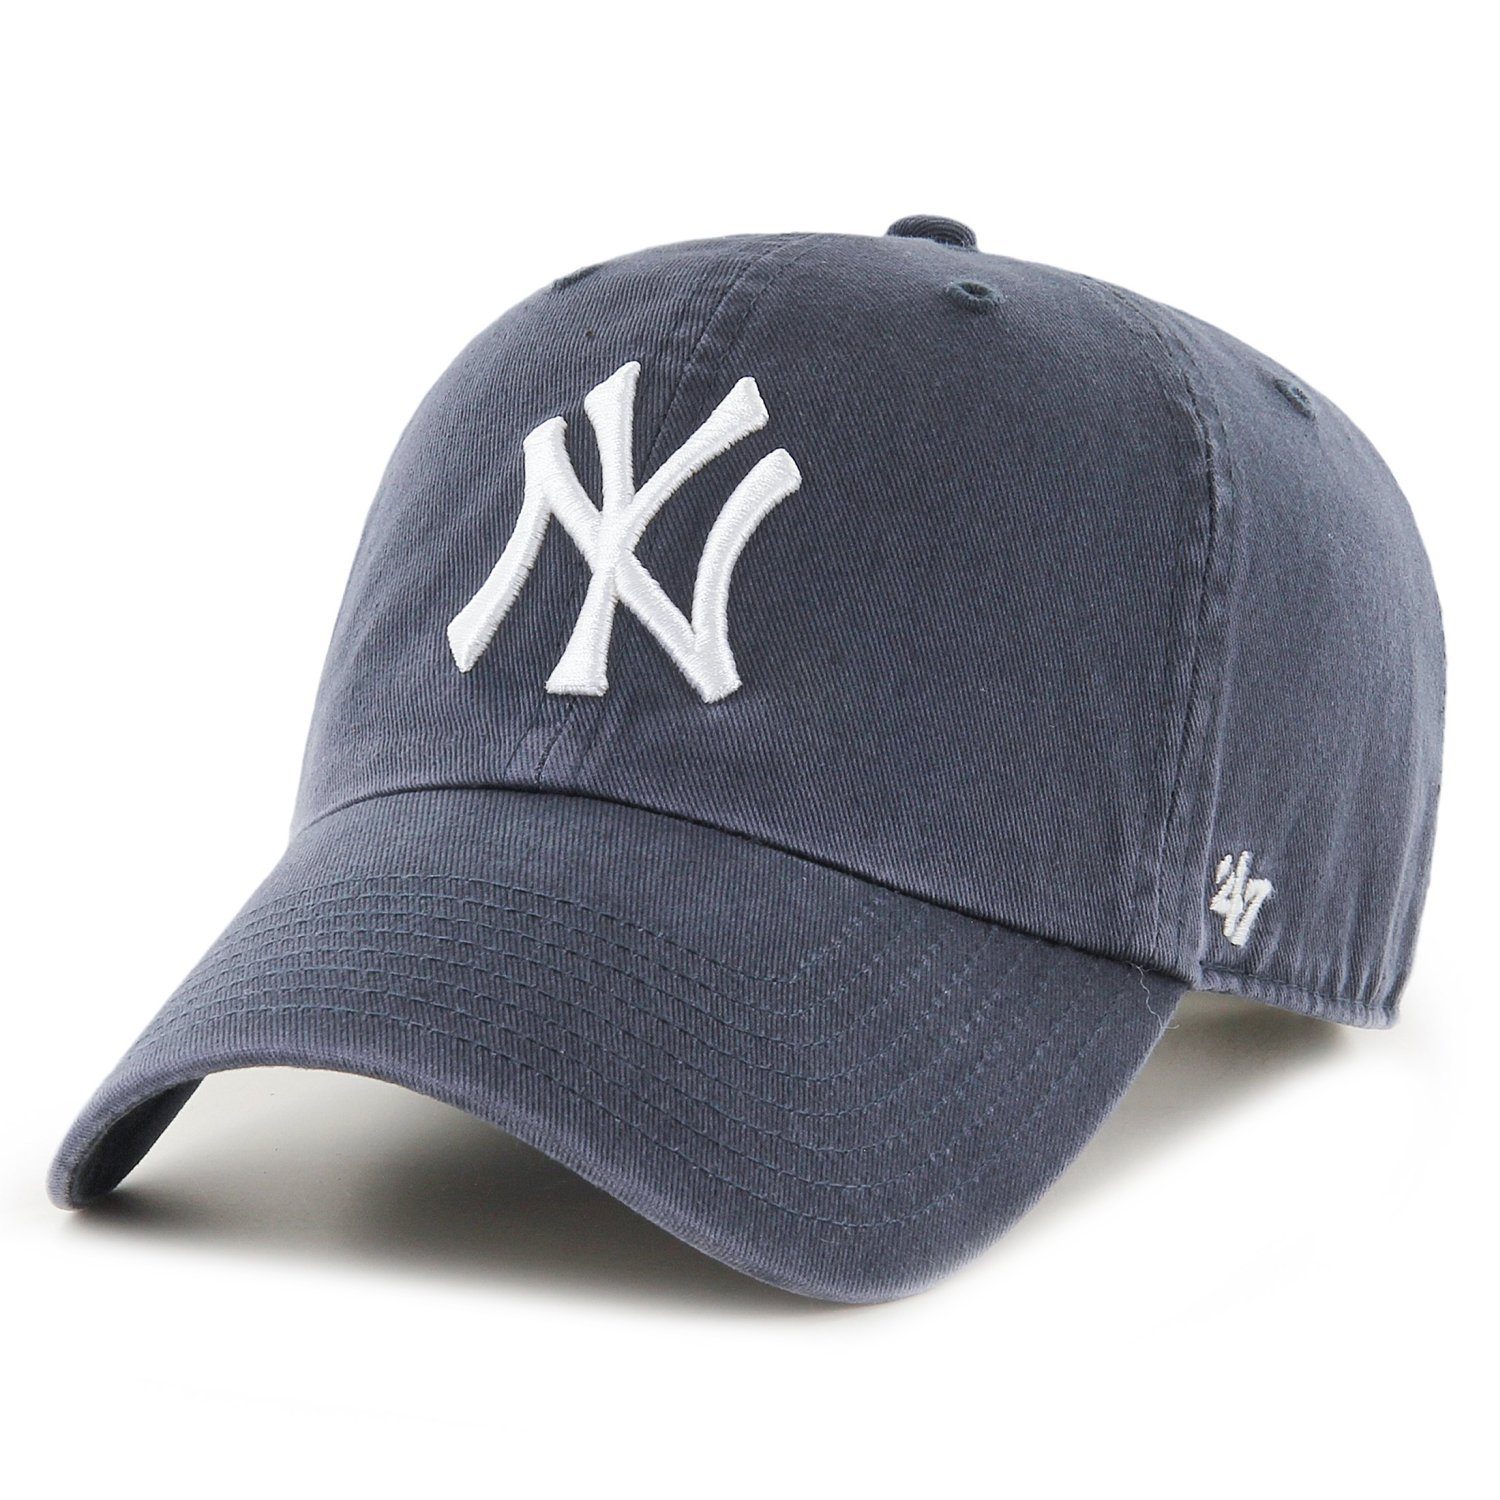 '47 MLB Cap York Brand Trucker Fit Yankees New Relaxed